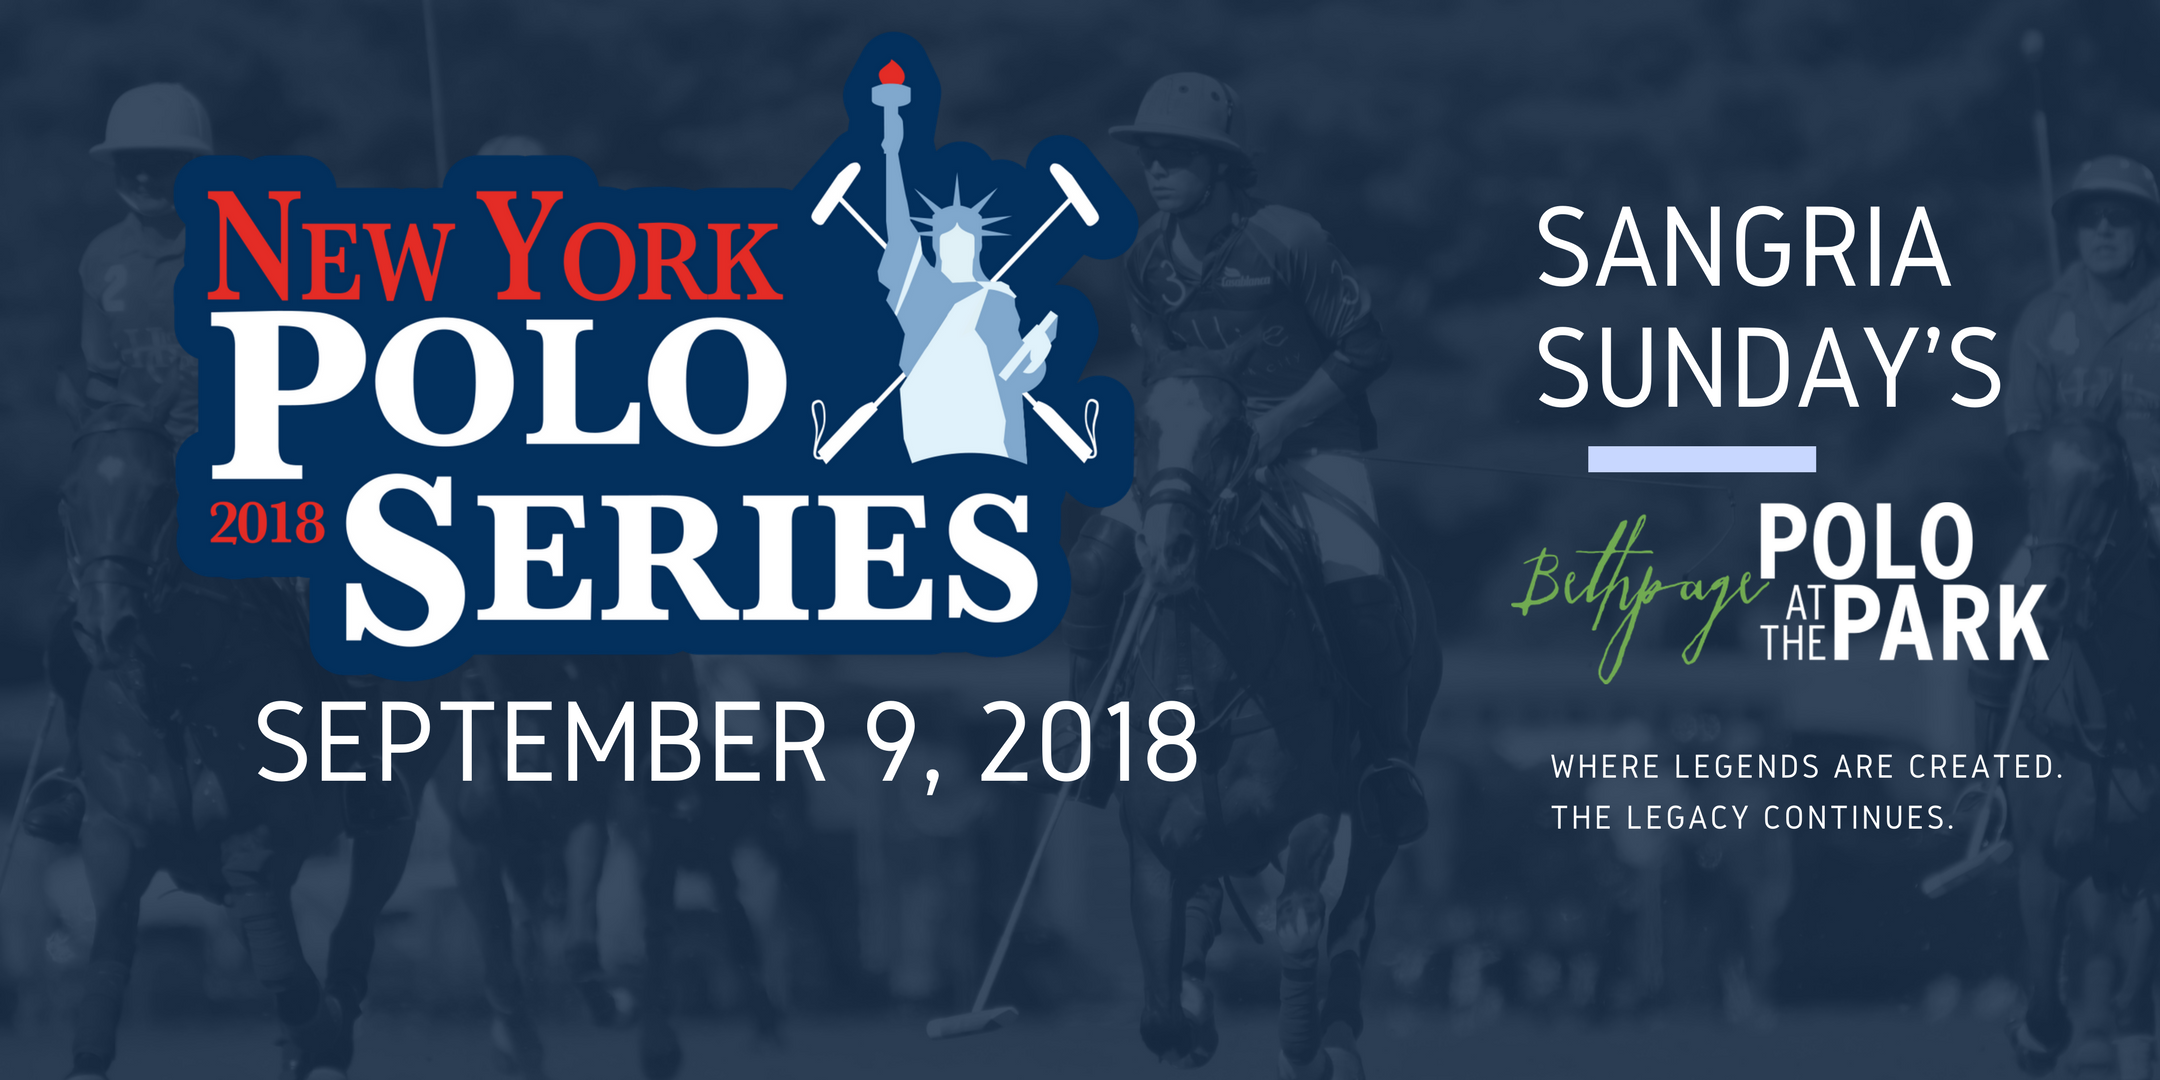 New York Polo Series (Sangria Sunday's 9/9)